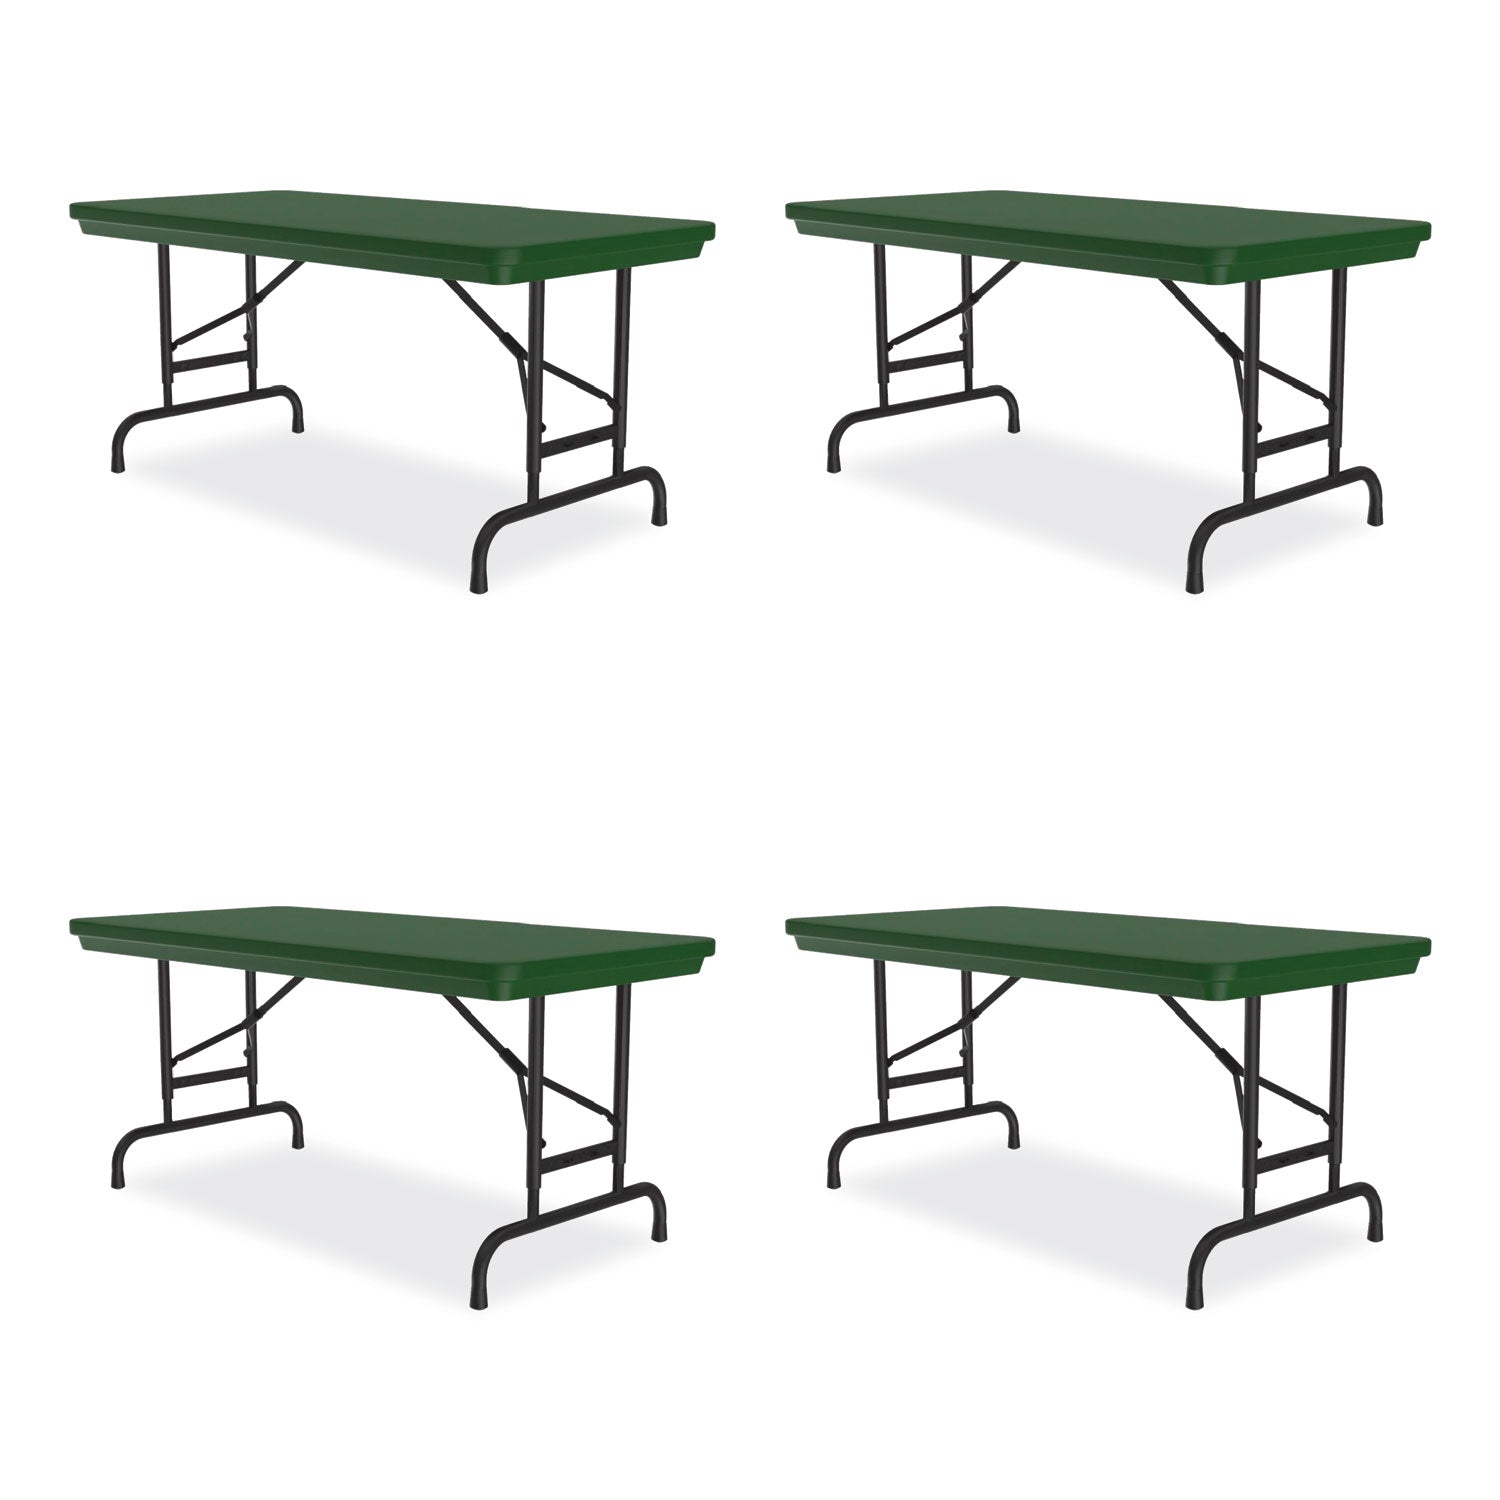 adjustable-folding-table-rectangular-48-x-24-x-22-to-32-green-top-black-legs-4-pallet-ships-in-4-6-business-days_crlra2448294p - 1